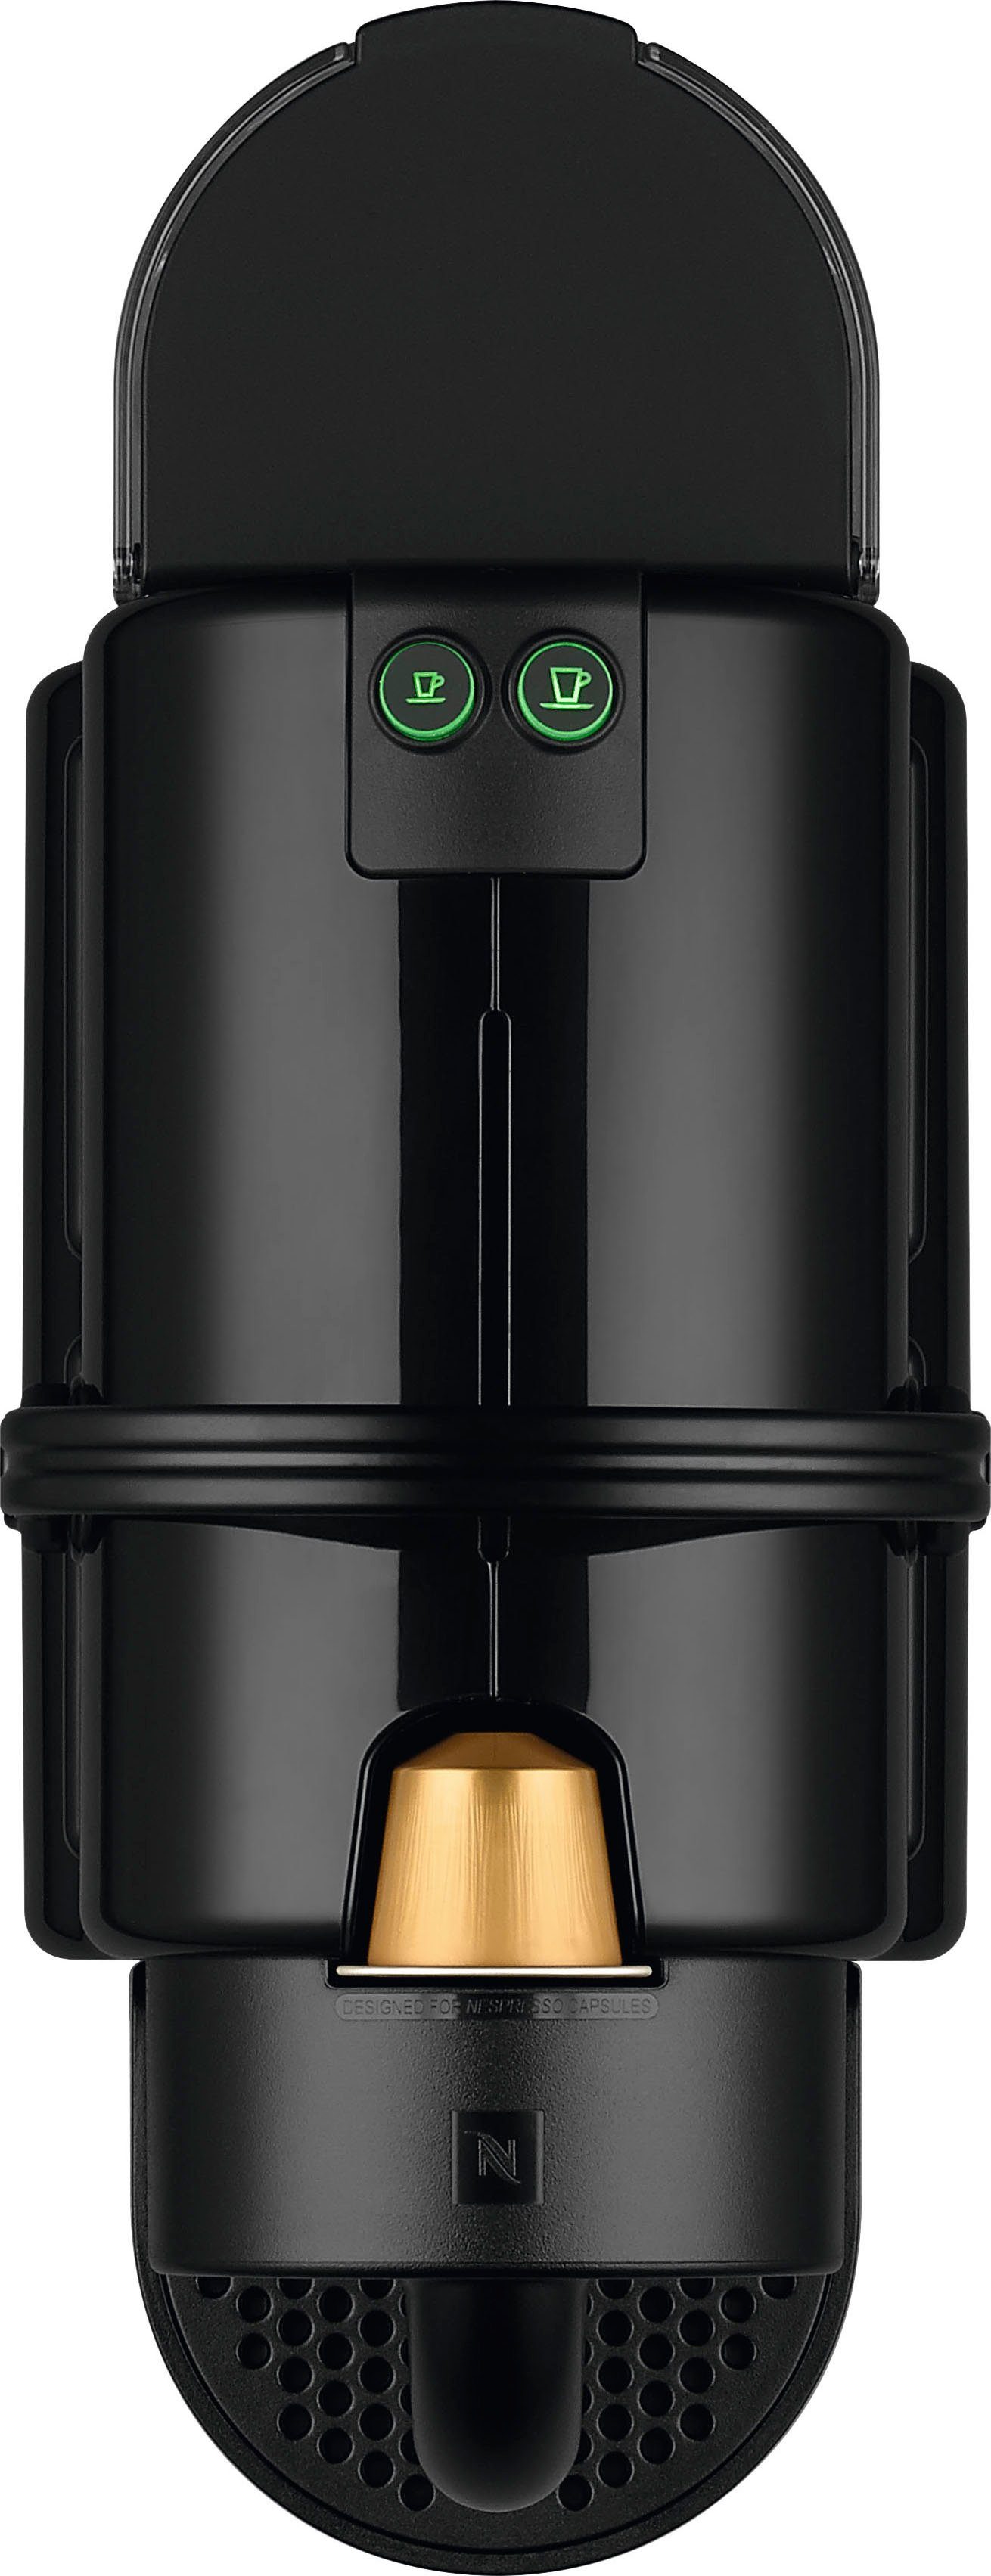 Willkommenspaket Kapseln inkl. von DeLonghi, Black, EN Kapselmaschine 80.B Inissia Nespresso 7 mit